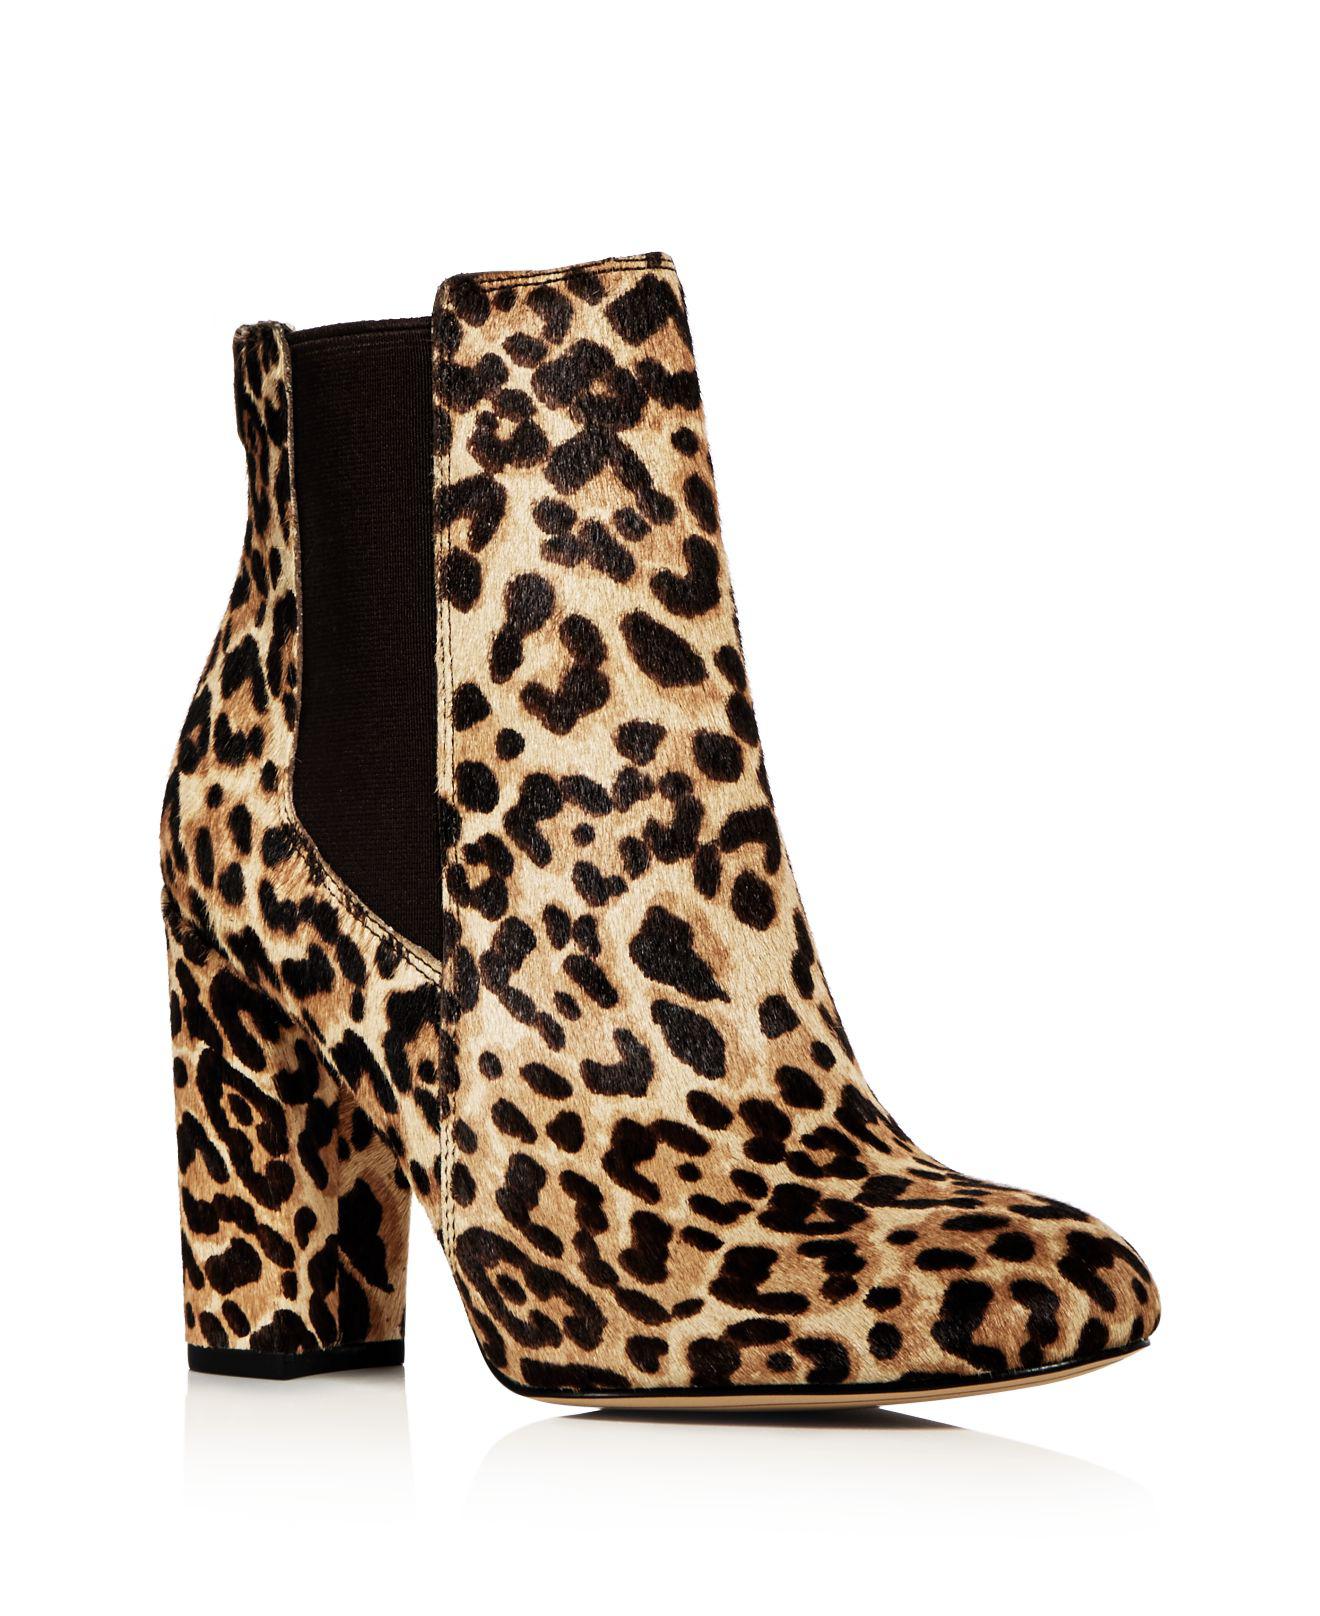 Lyst - Sam Edelman Women's Case Leopard Print Calf Hair High-heel ...